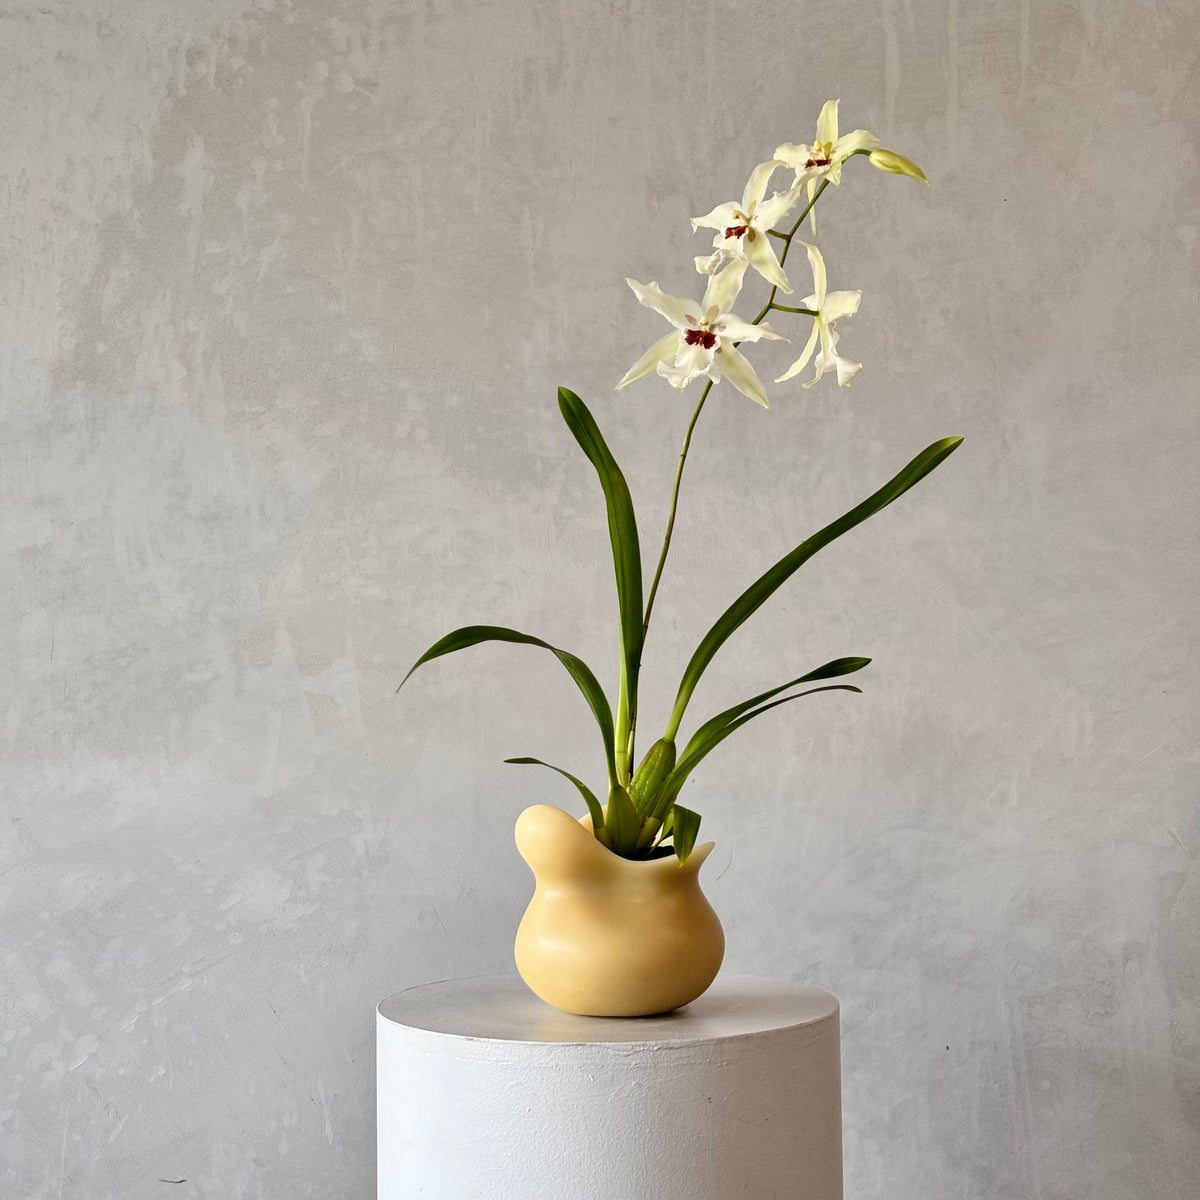 Oncidium orchid